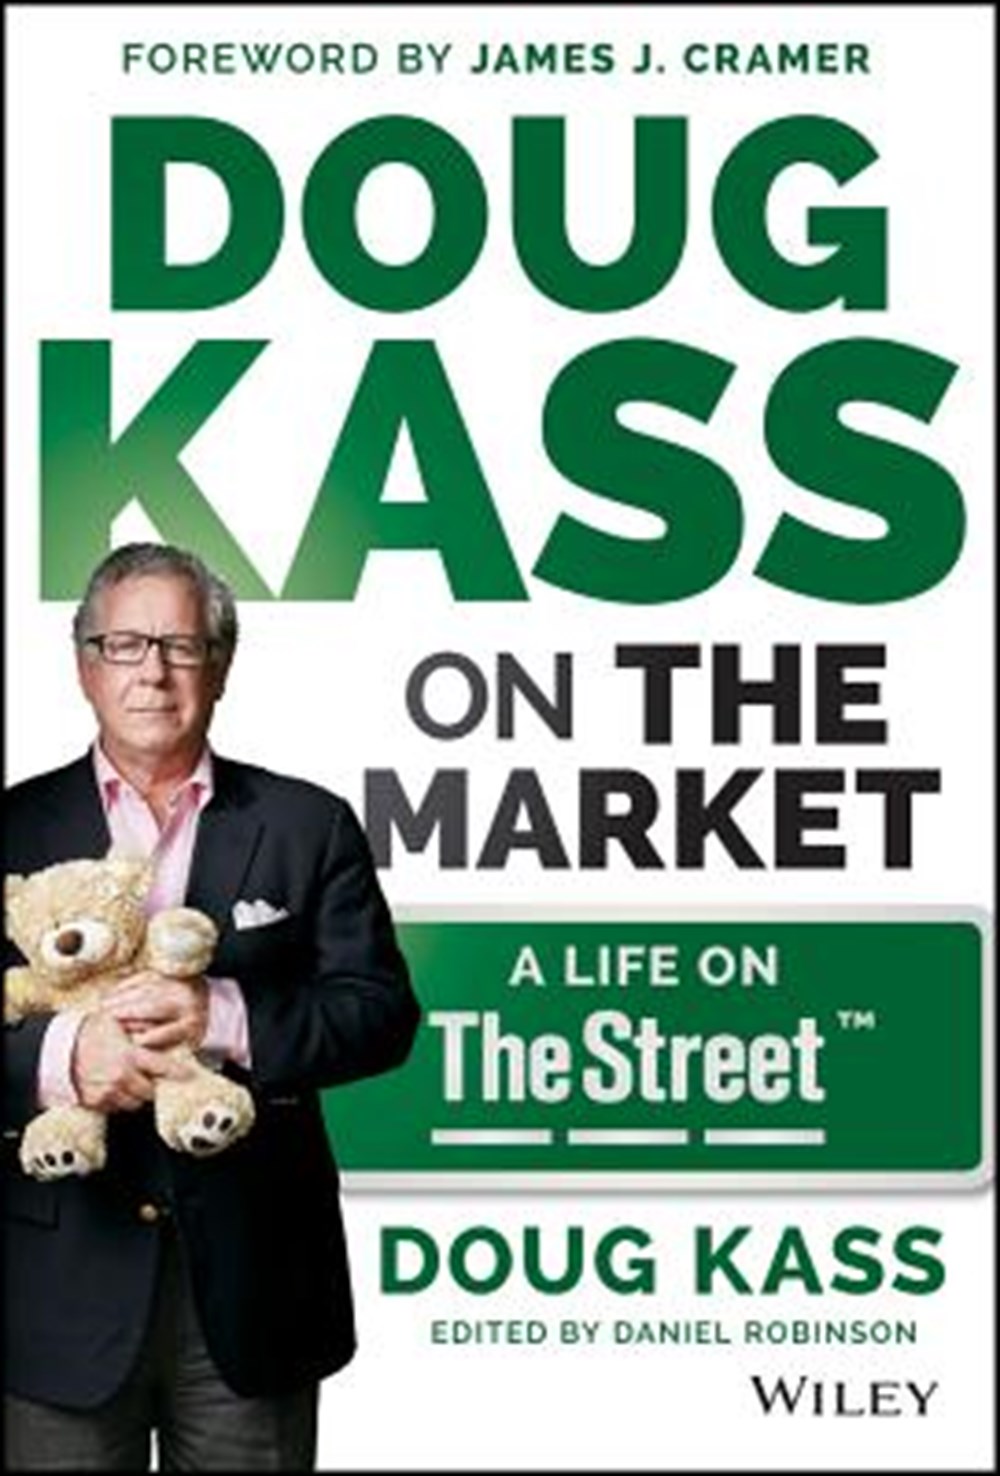 Doug Kass on the Market A Life on Thestreet